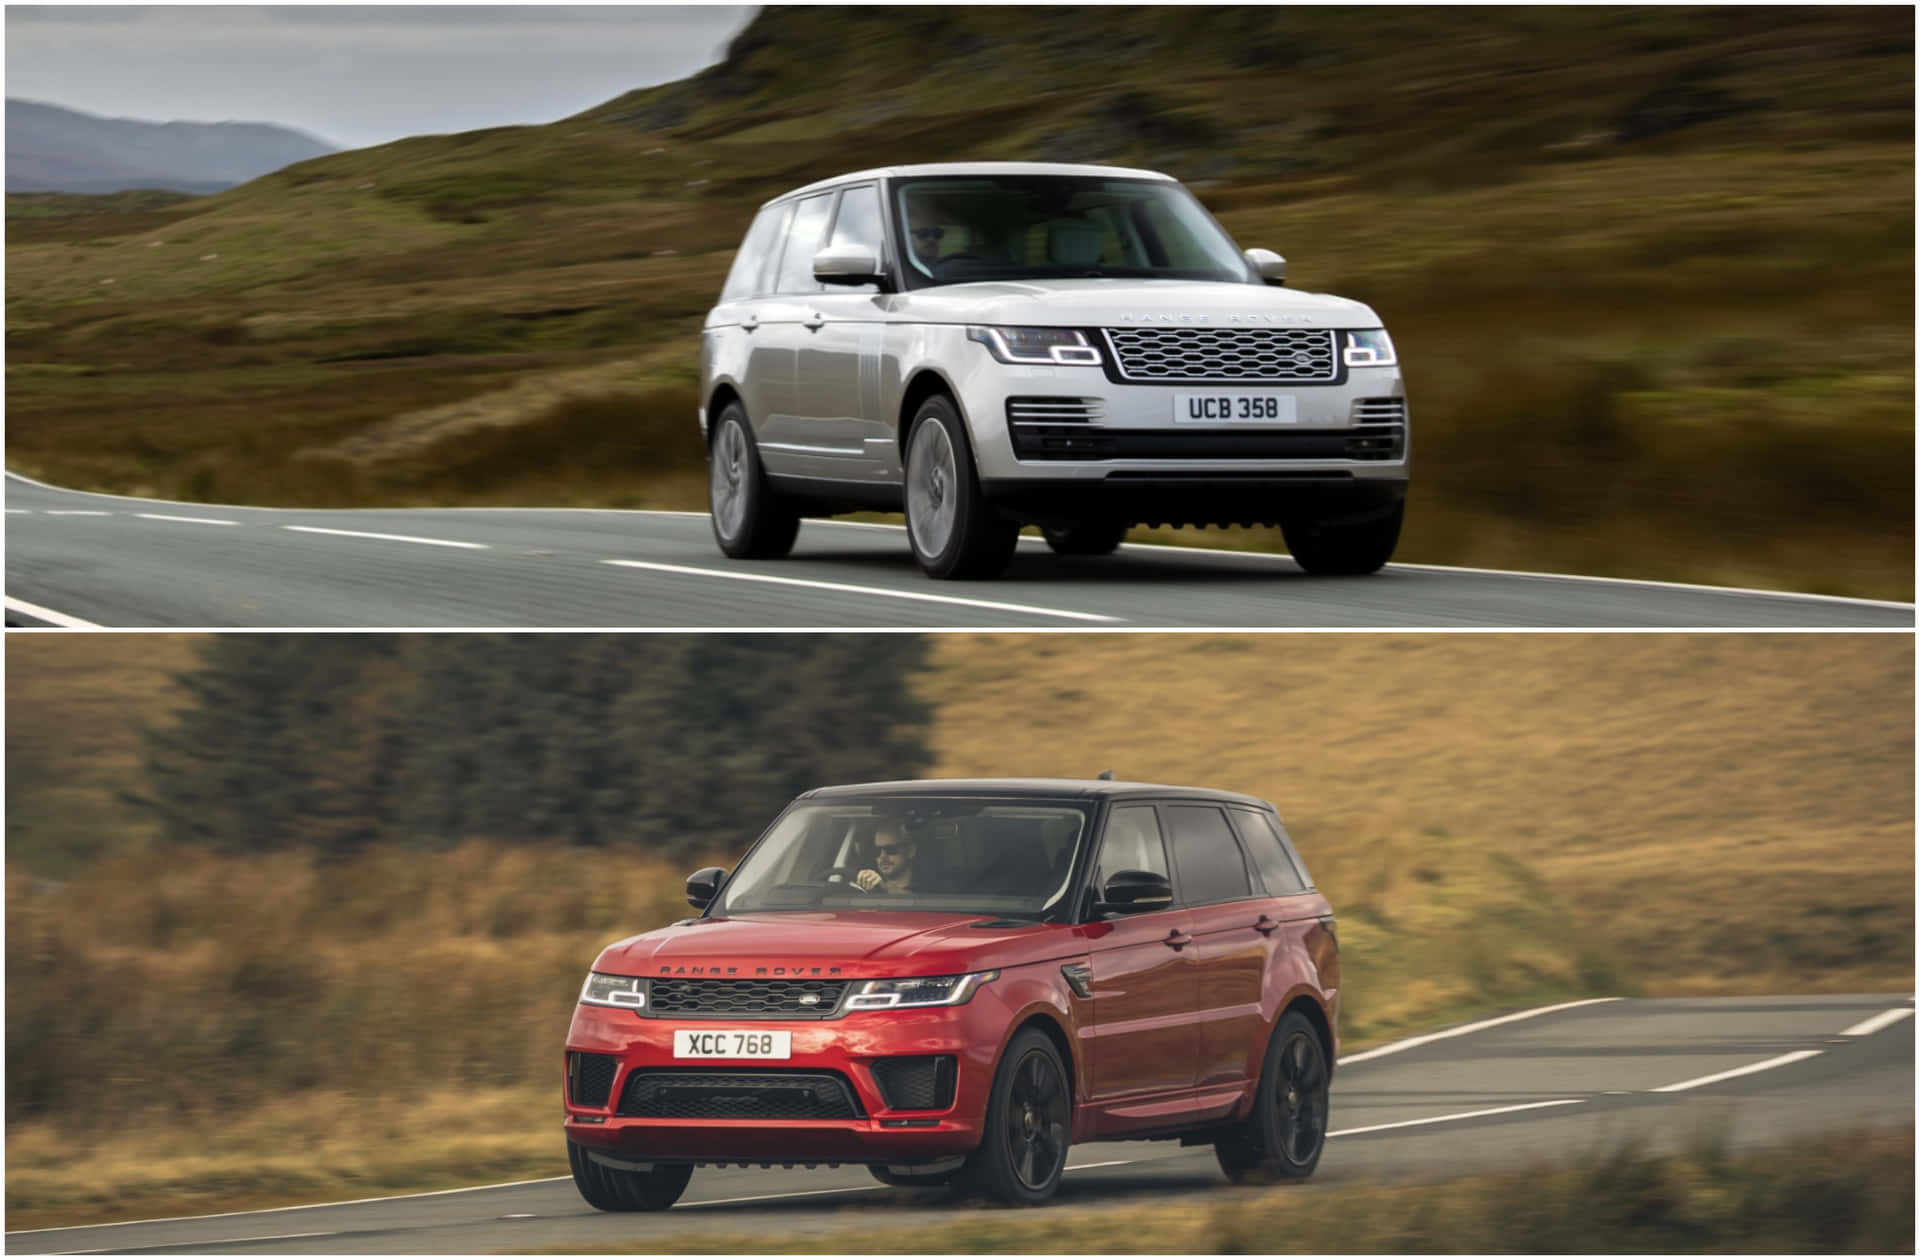 Range Rover 4x4 Vehicle Adventure Awaits